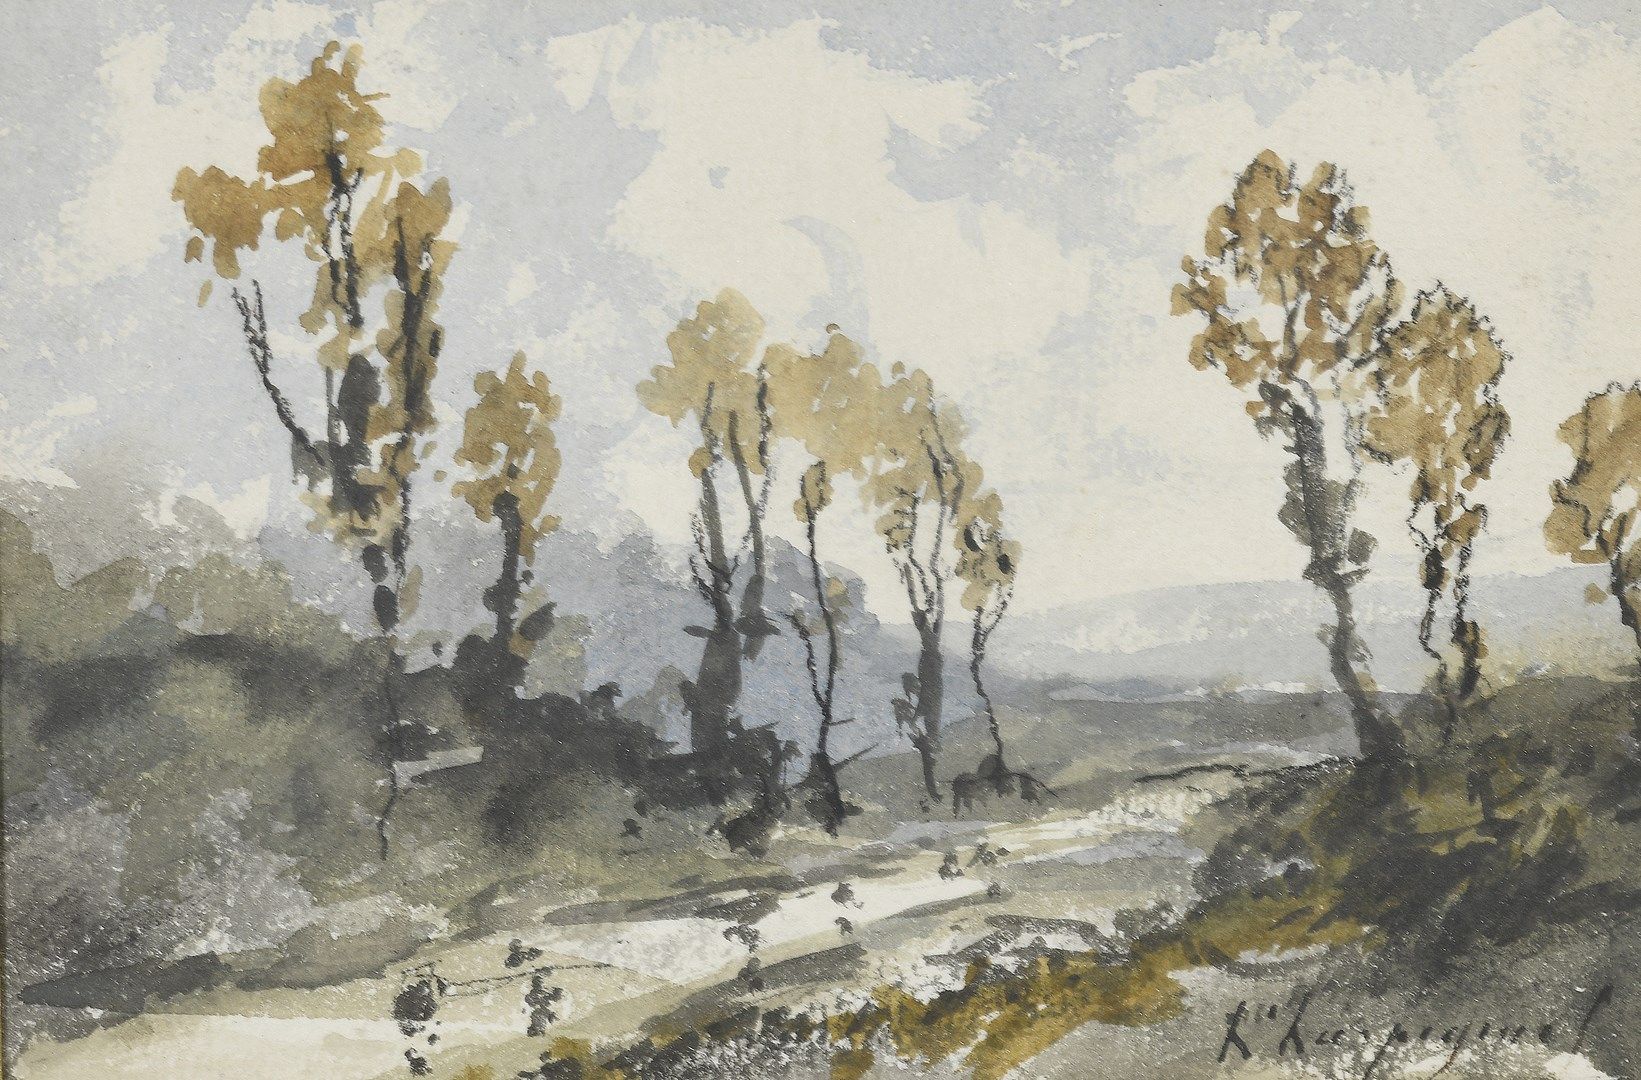 Null 亨利-哈皮涅斯，1819-1916年

有树木的河流

水彩画

右下方有签名

11.5 x 17 cm at sight